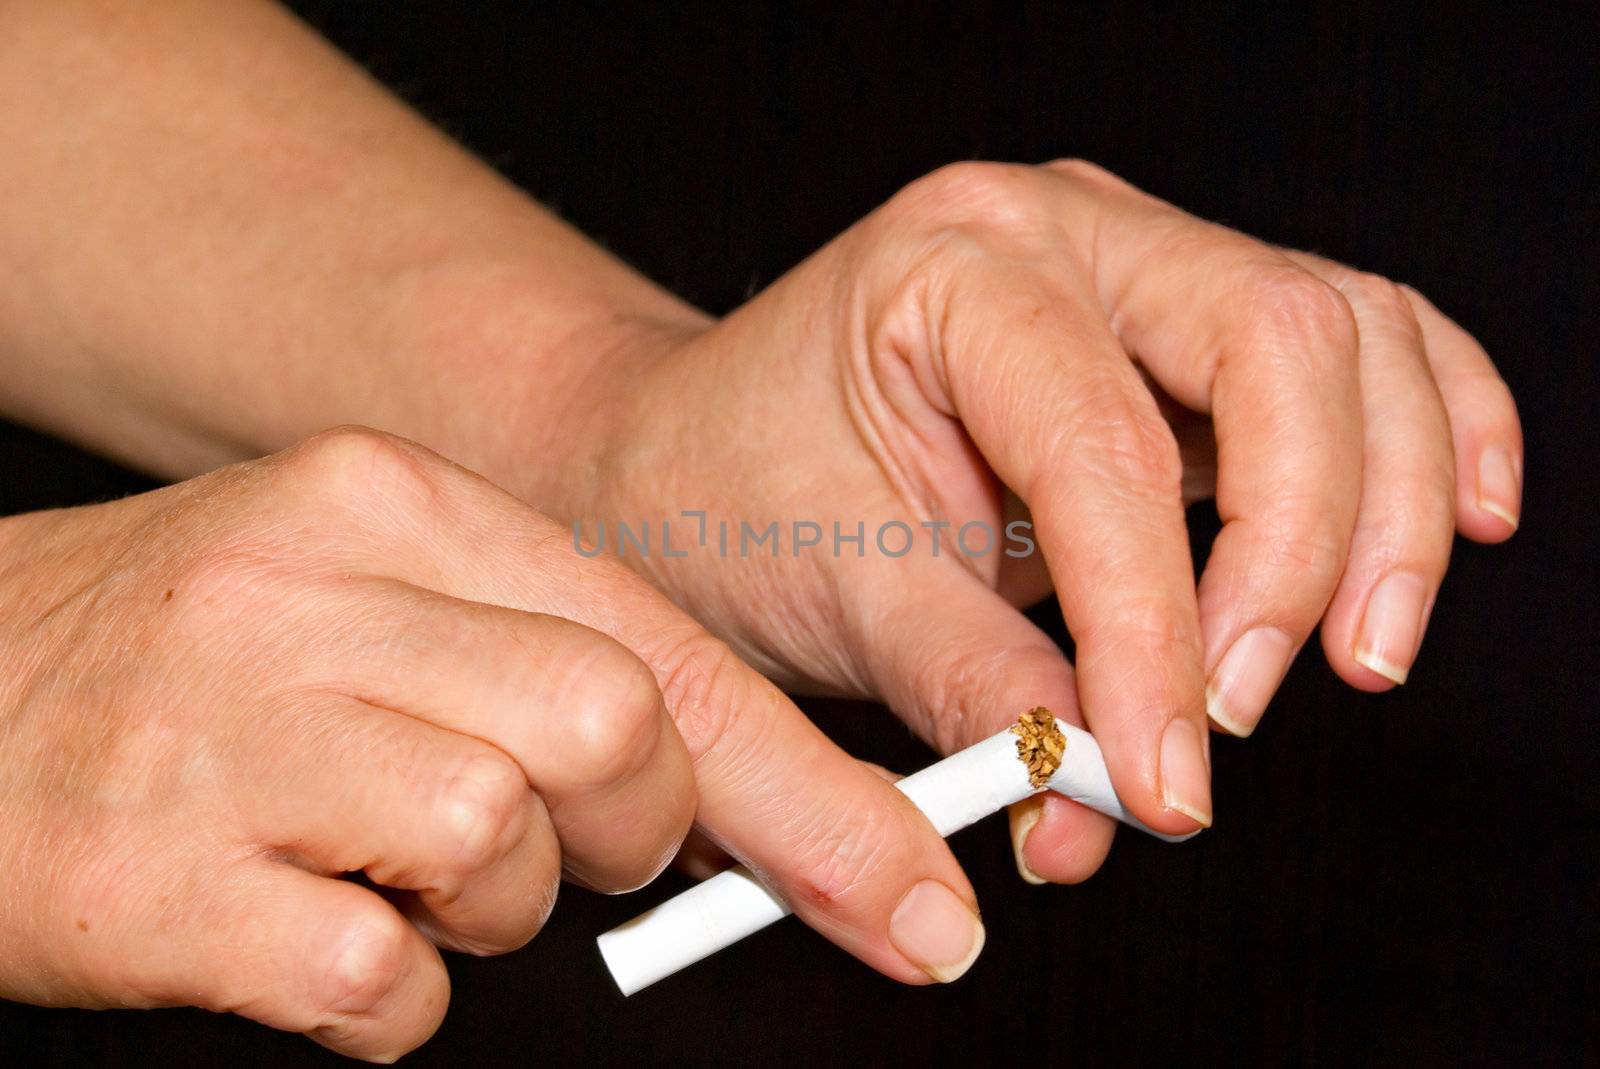 hands break the cigarette